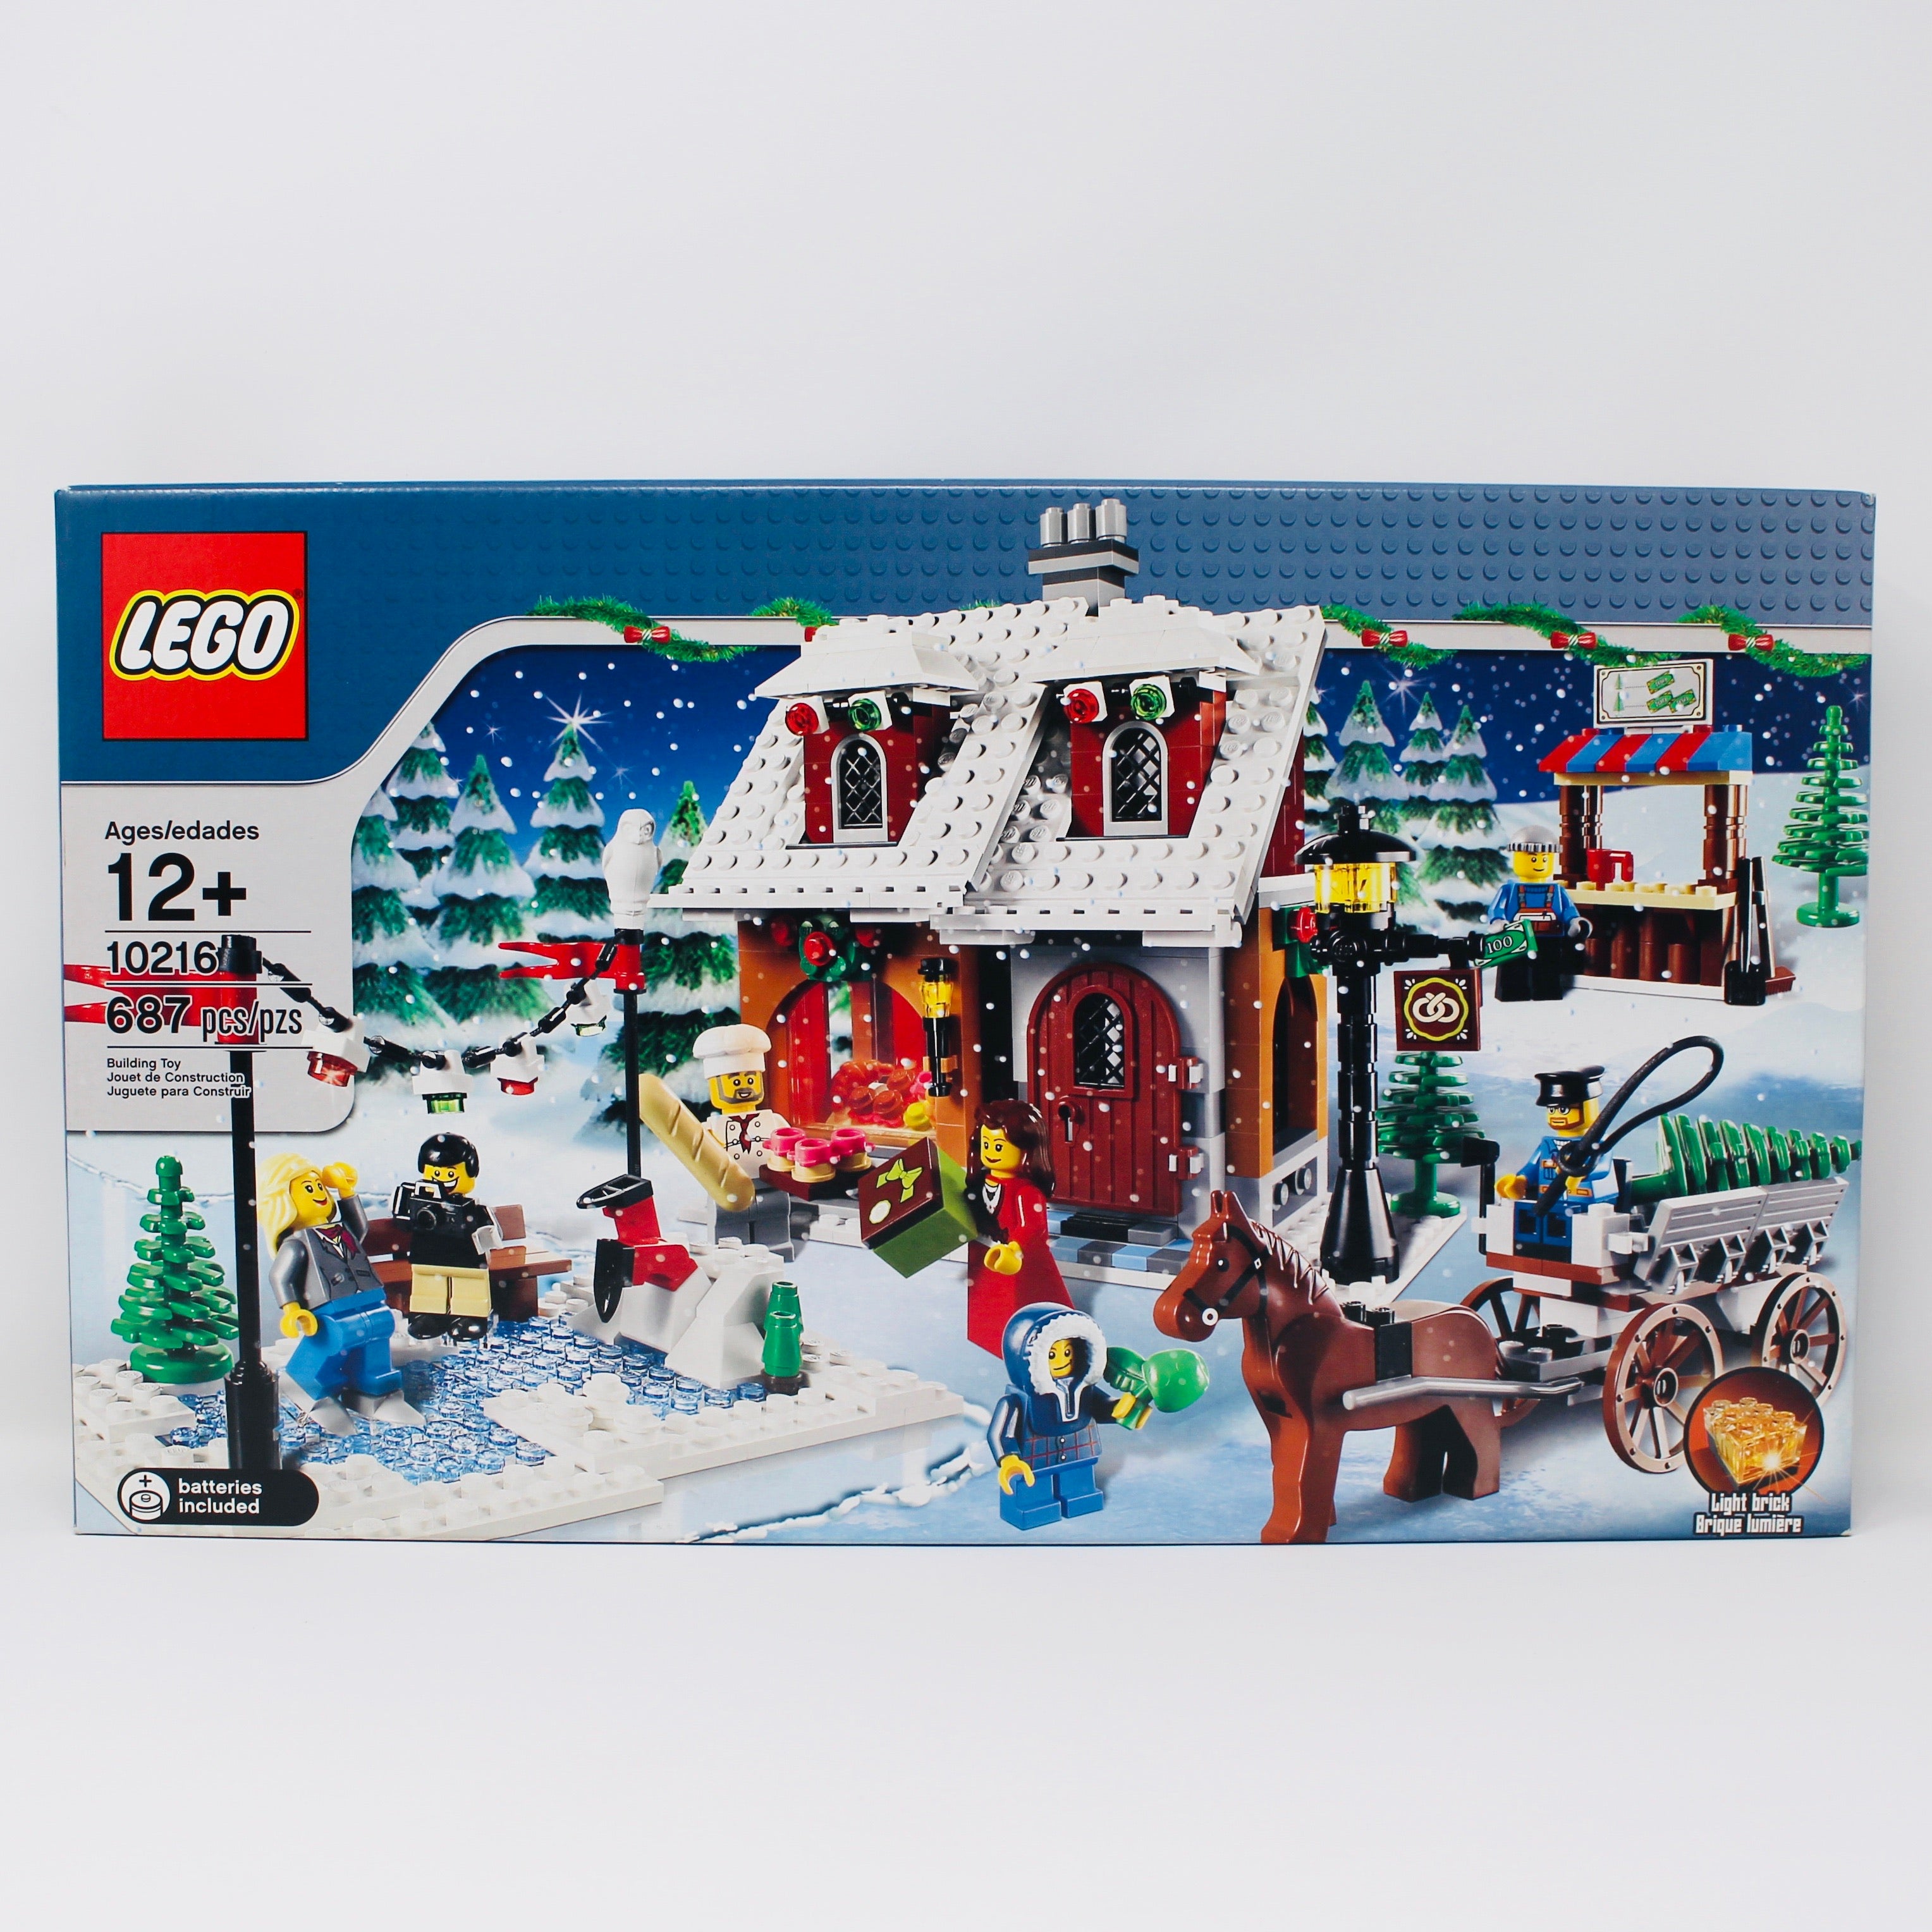 Retired Set 10216 LEGO Winter Village Bakery